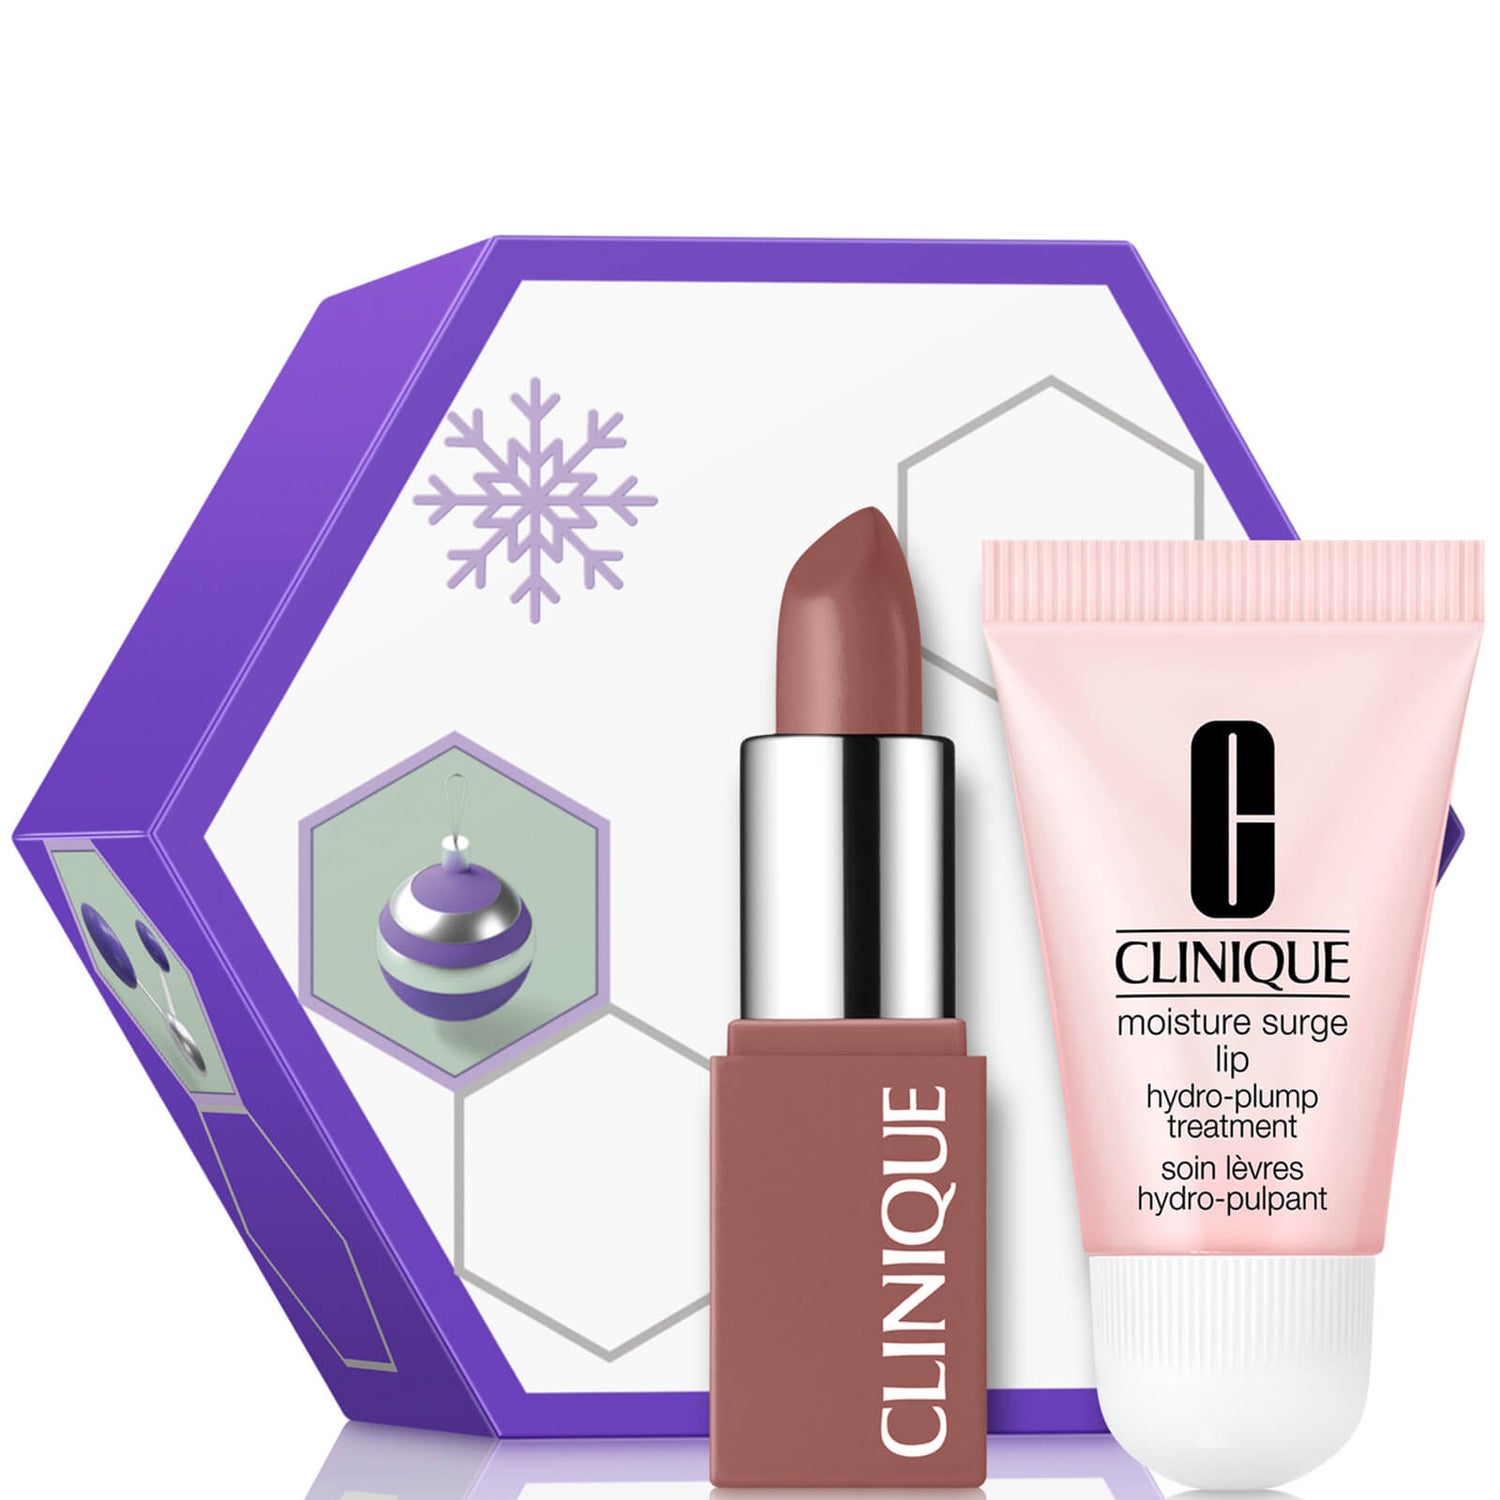 Clinique Lip Luxury Lip Care and Lipstick Makeup Gift Set